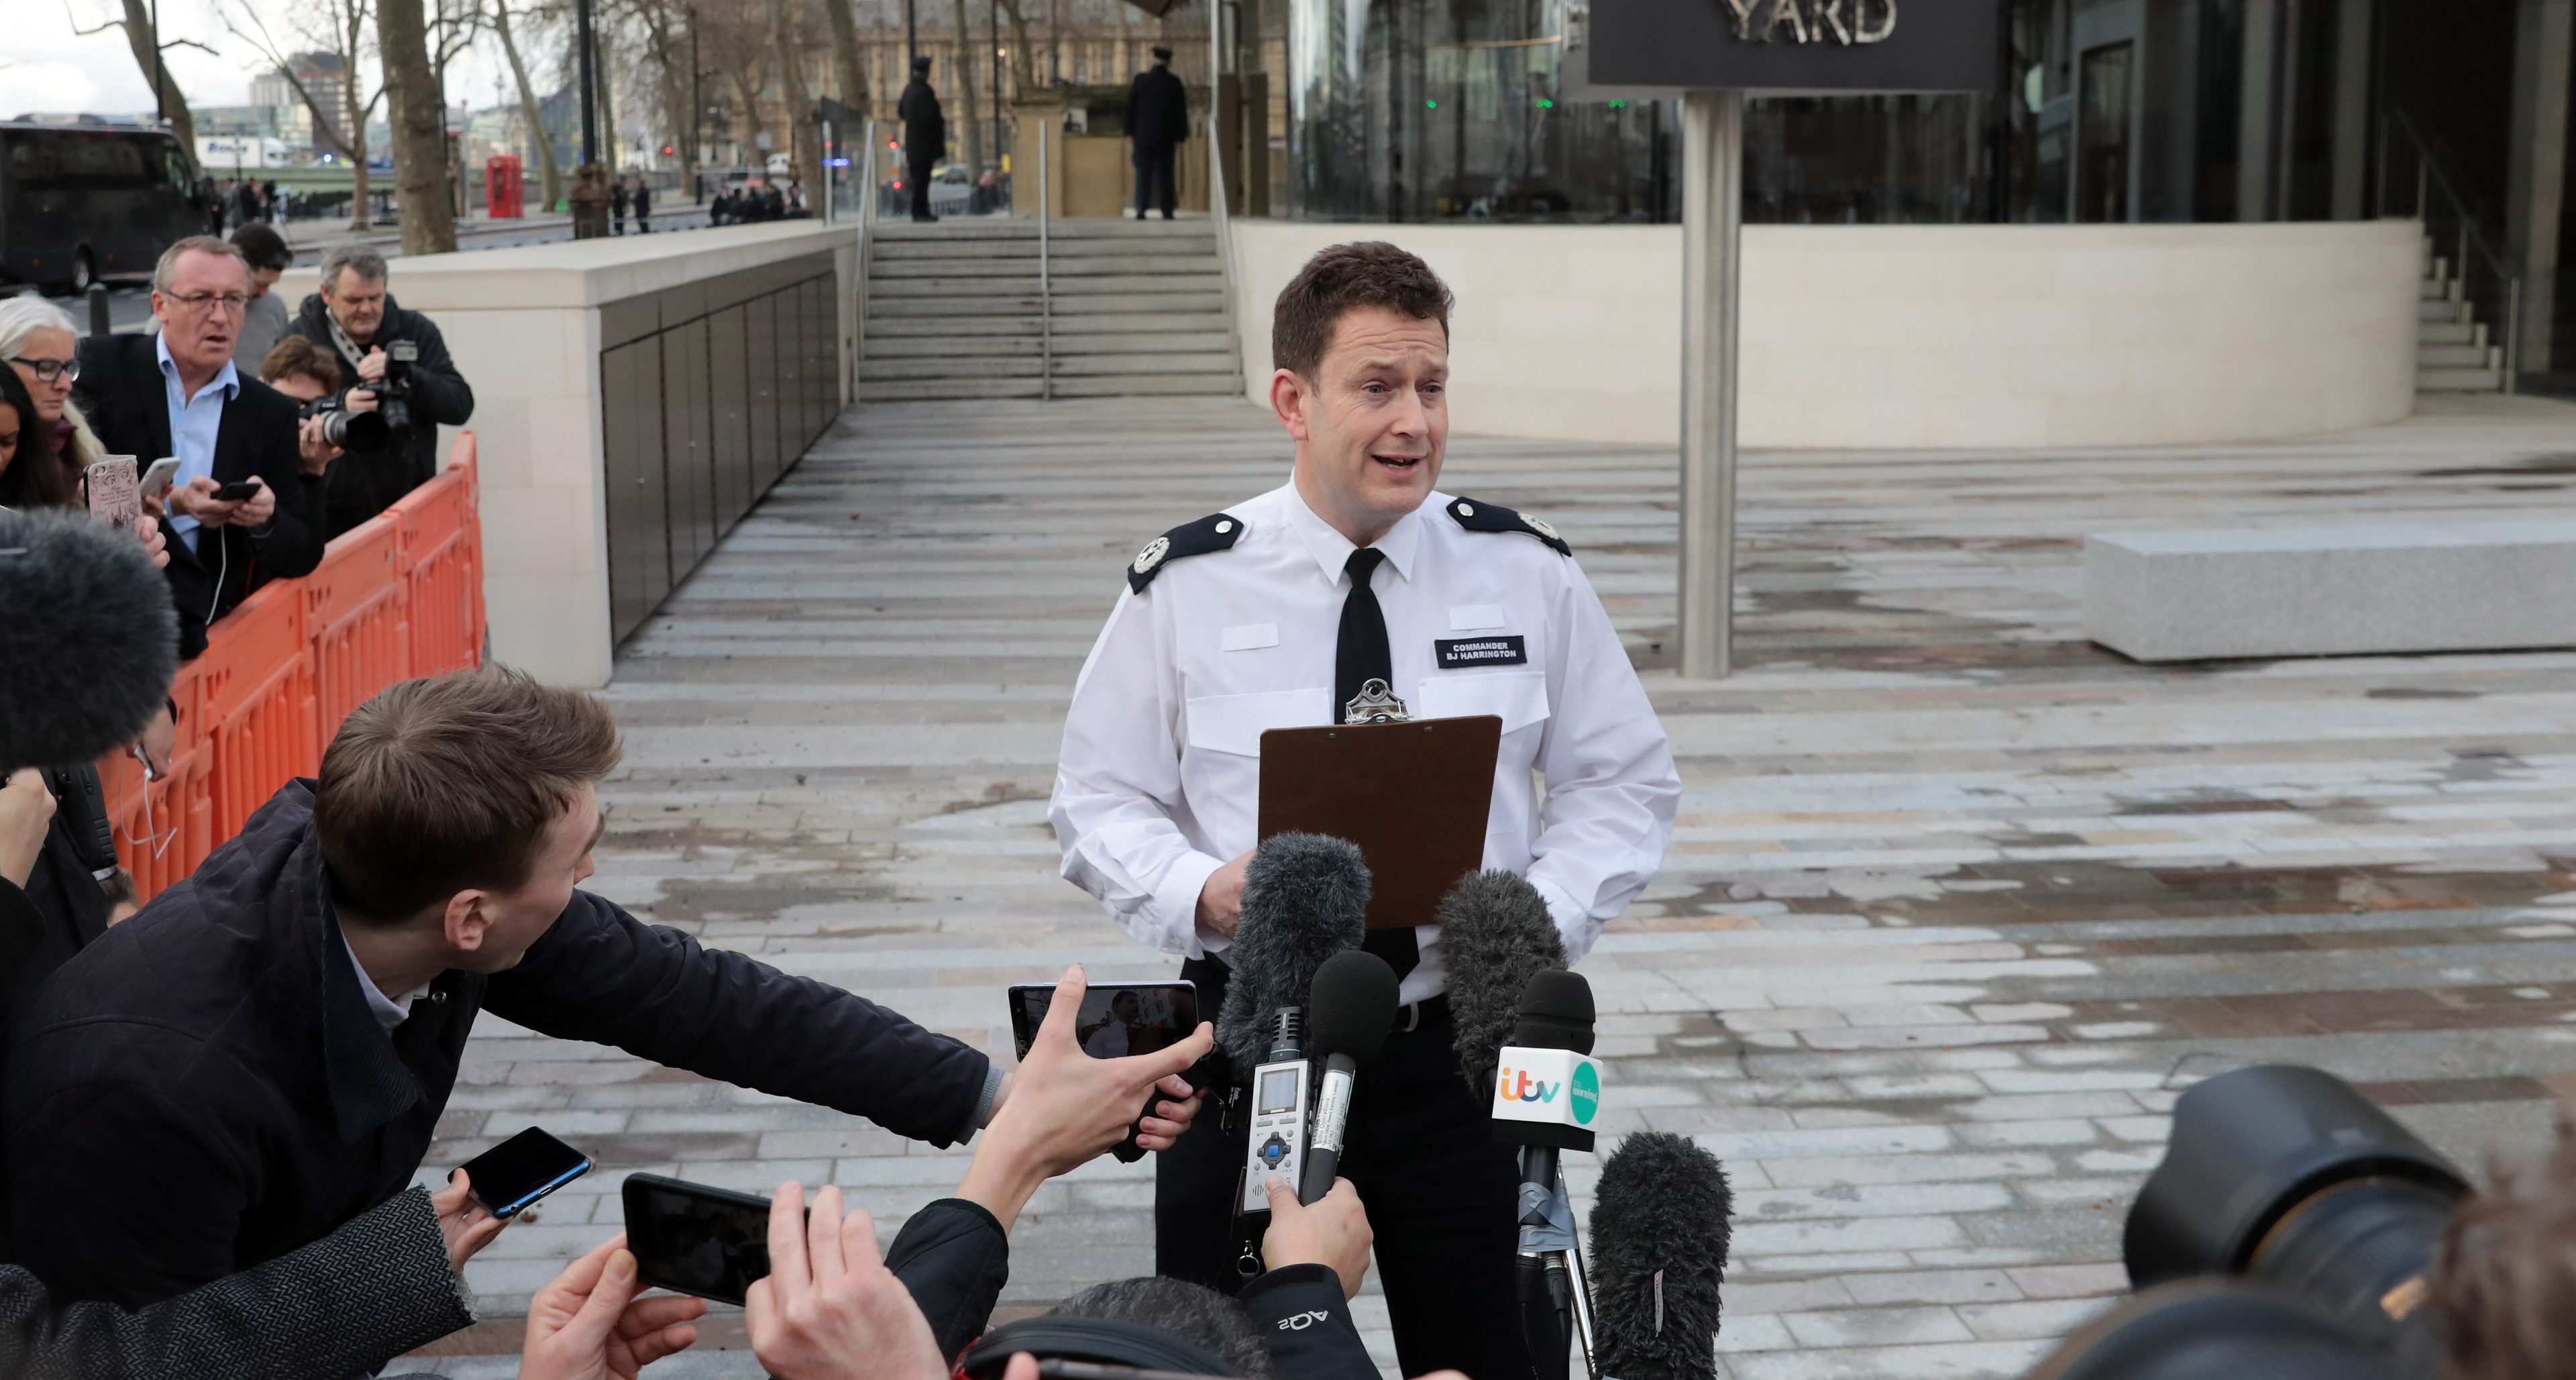 Commander BJ Harrington of the Metropolitan Police gives a statement outside New Scotland Yard.